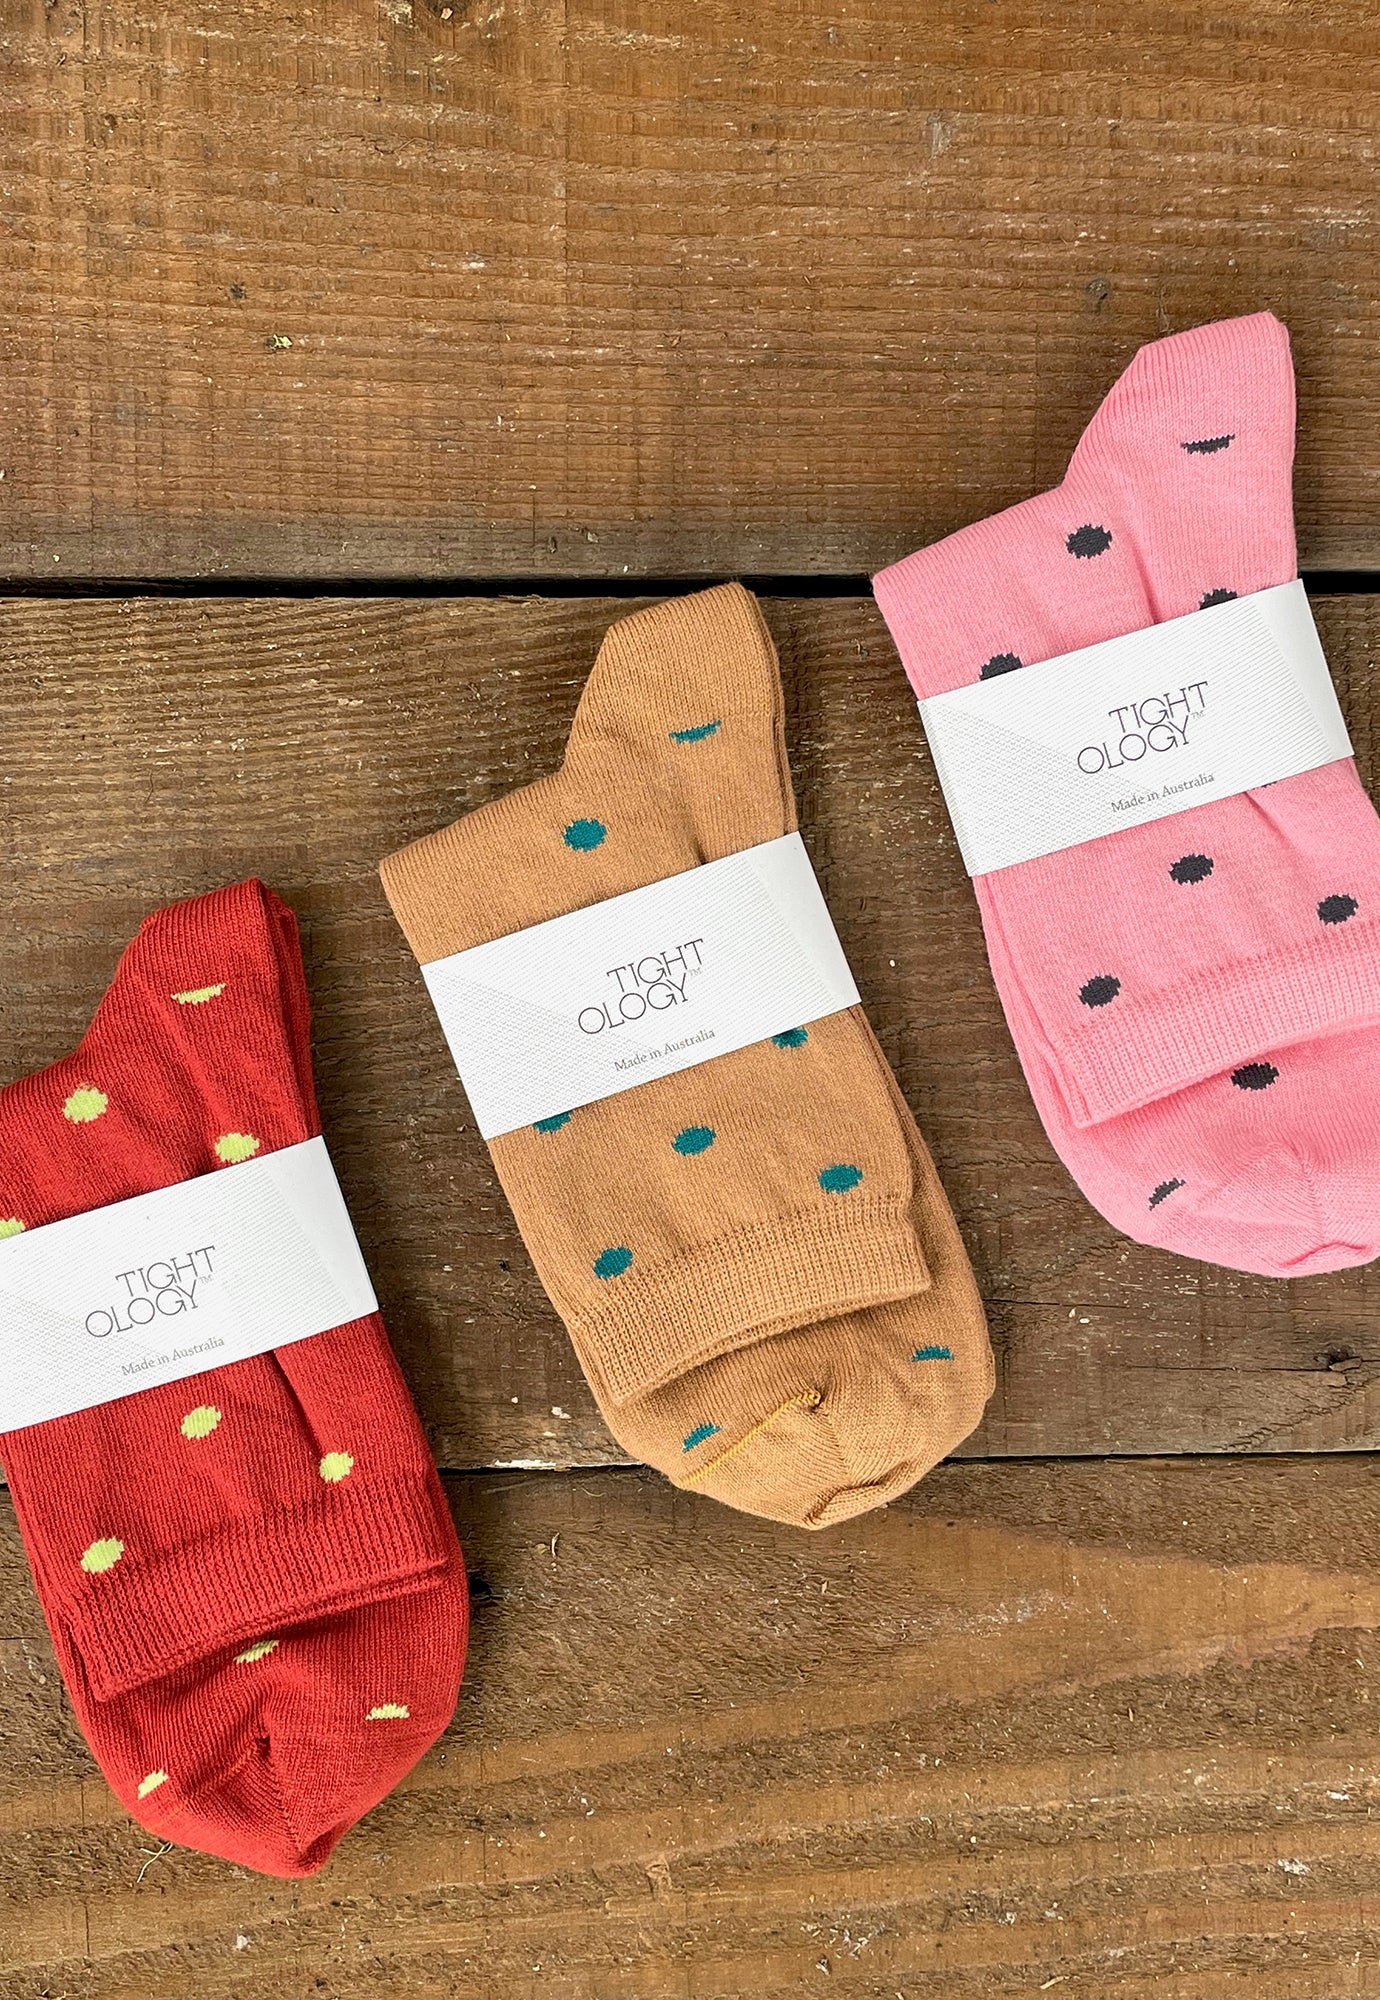 tightology - dots socks